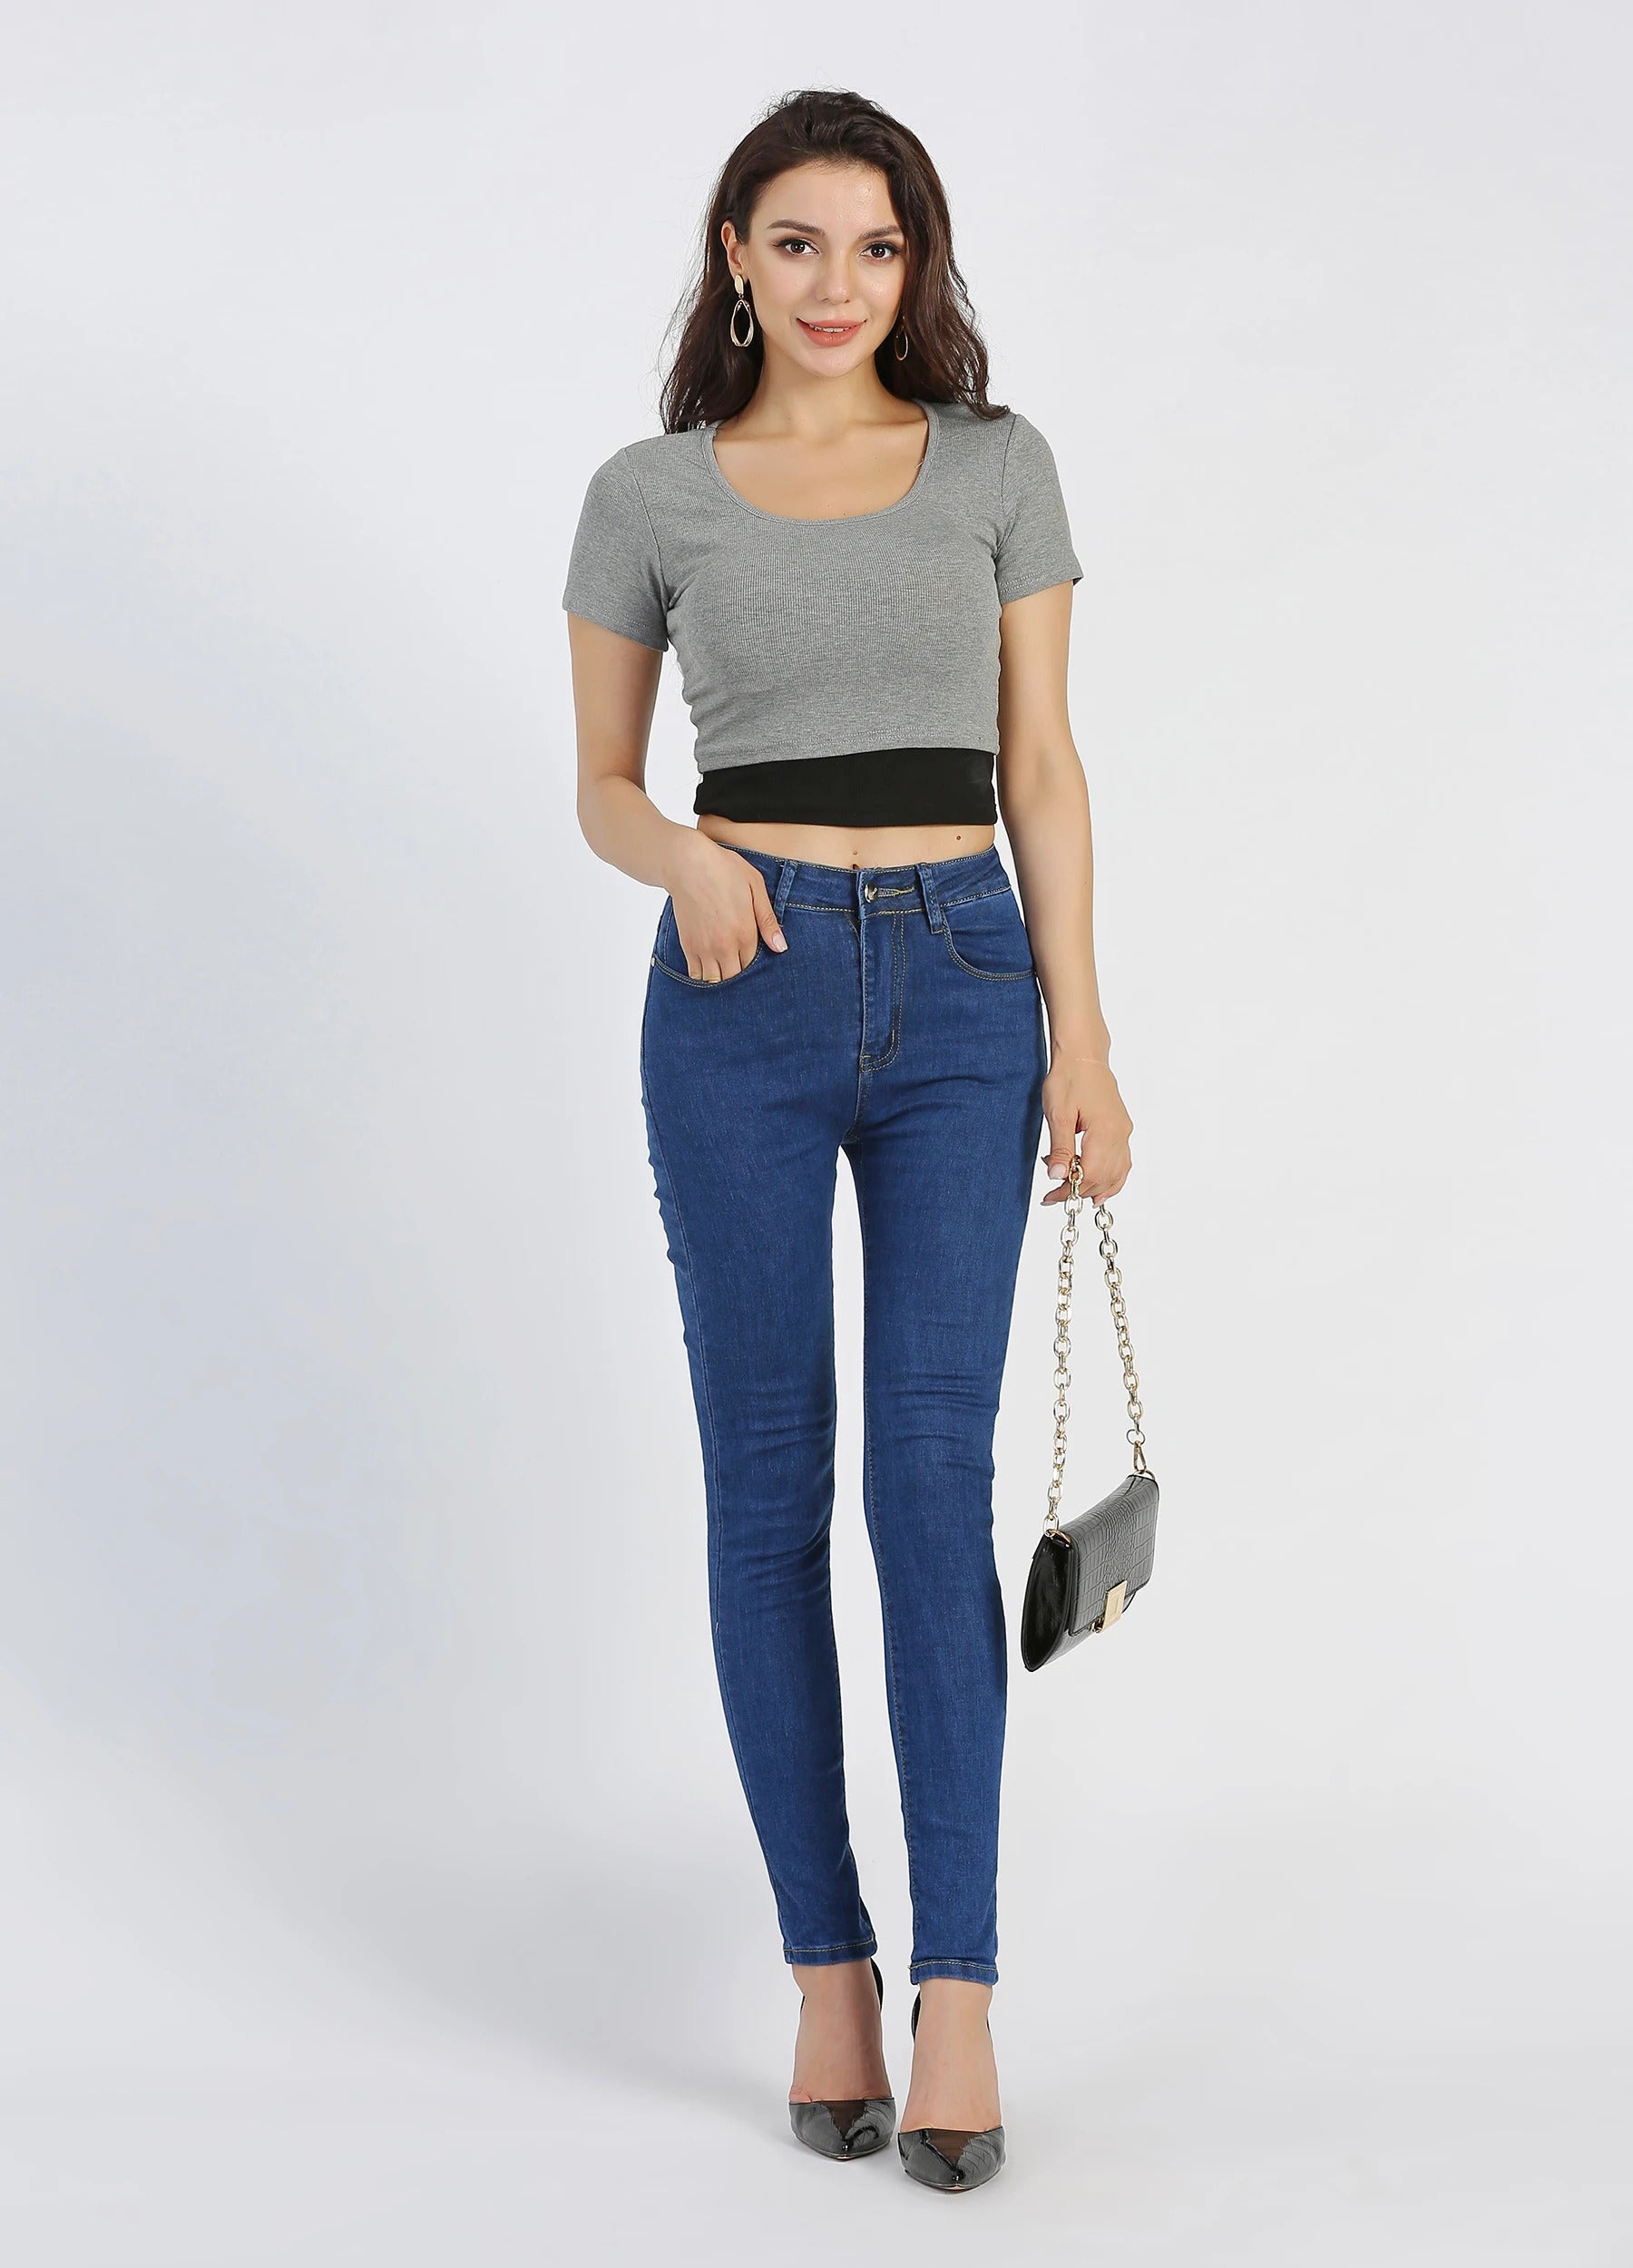 MECALA Women's High Waist Zip Closure Skinny Jeans-Dark Blue main view